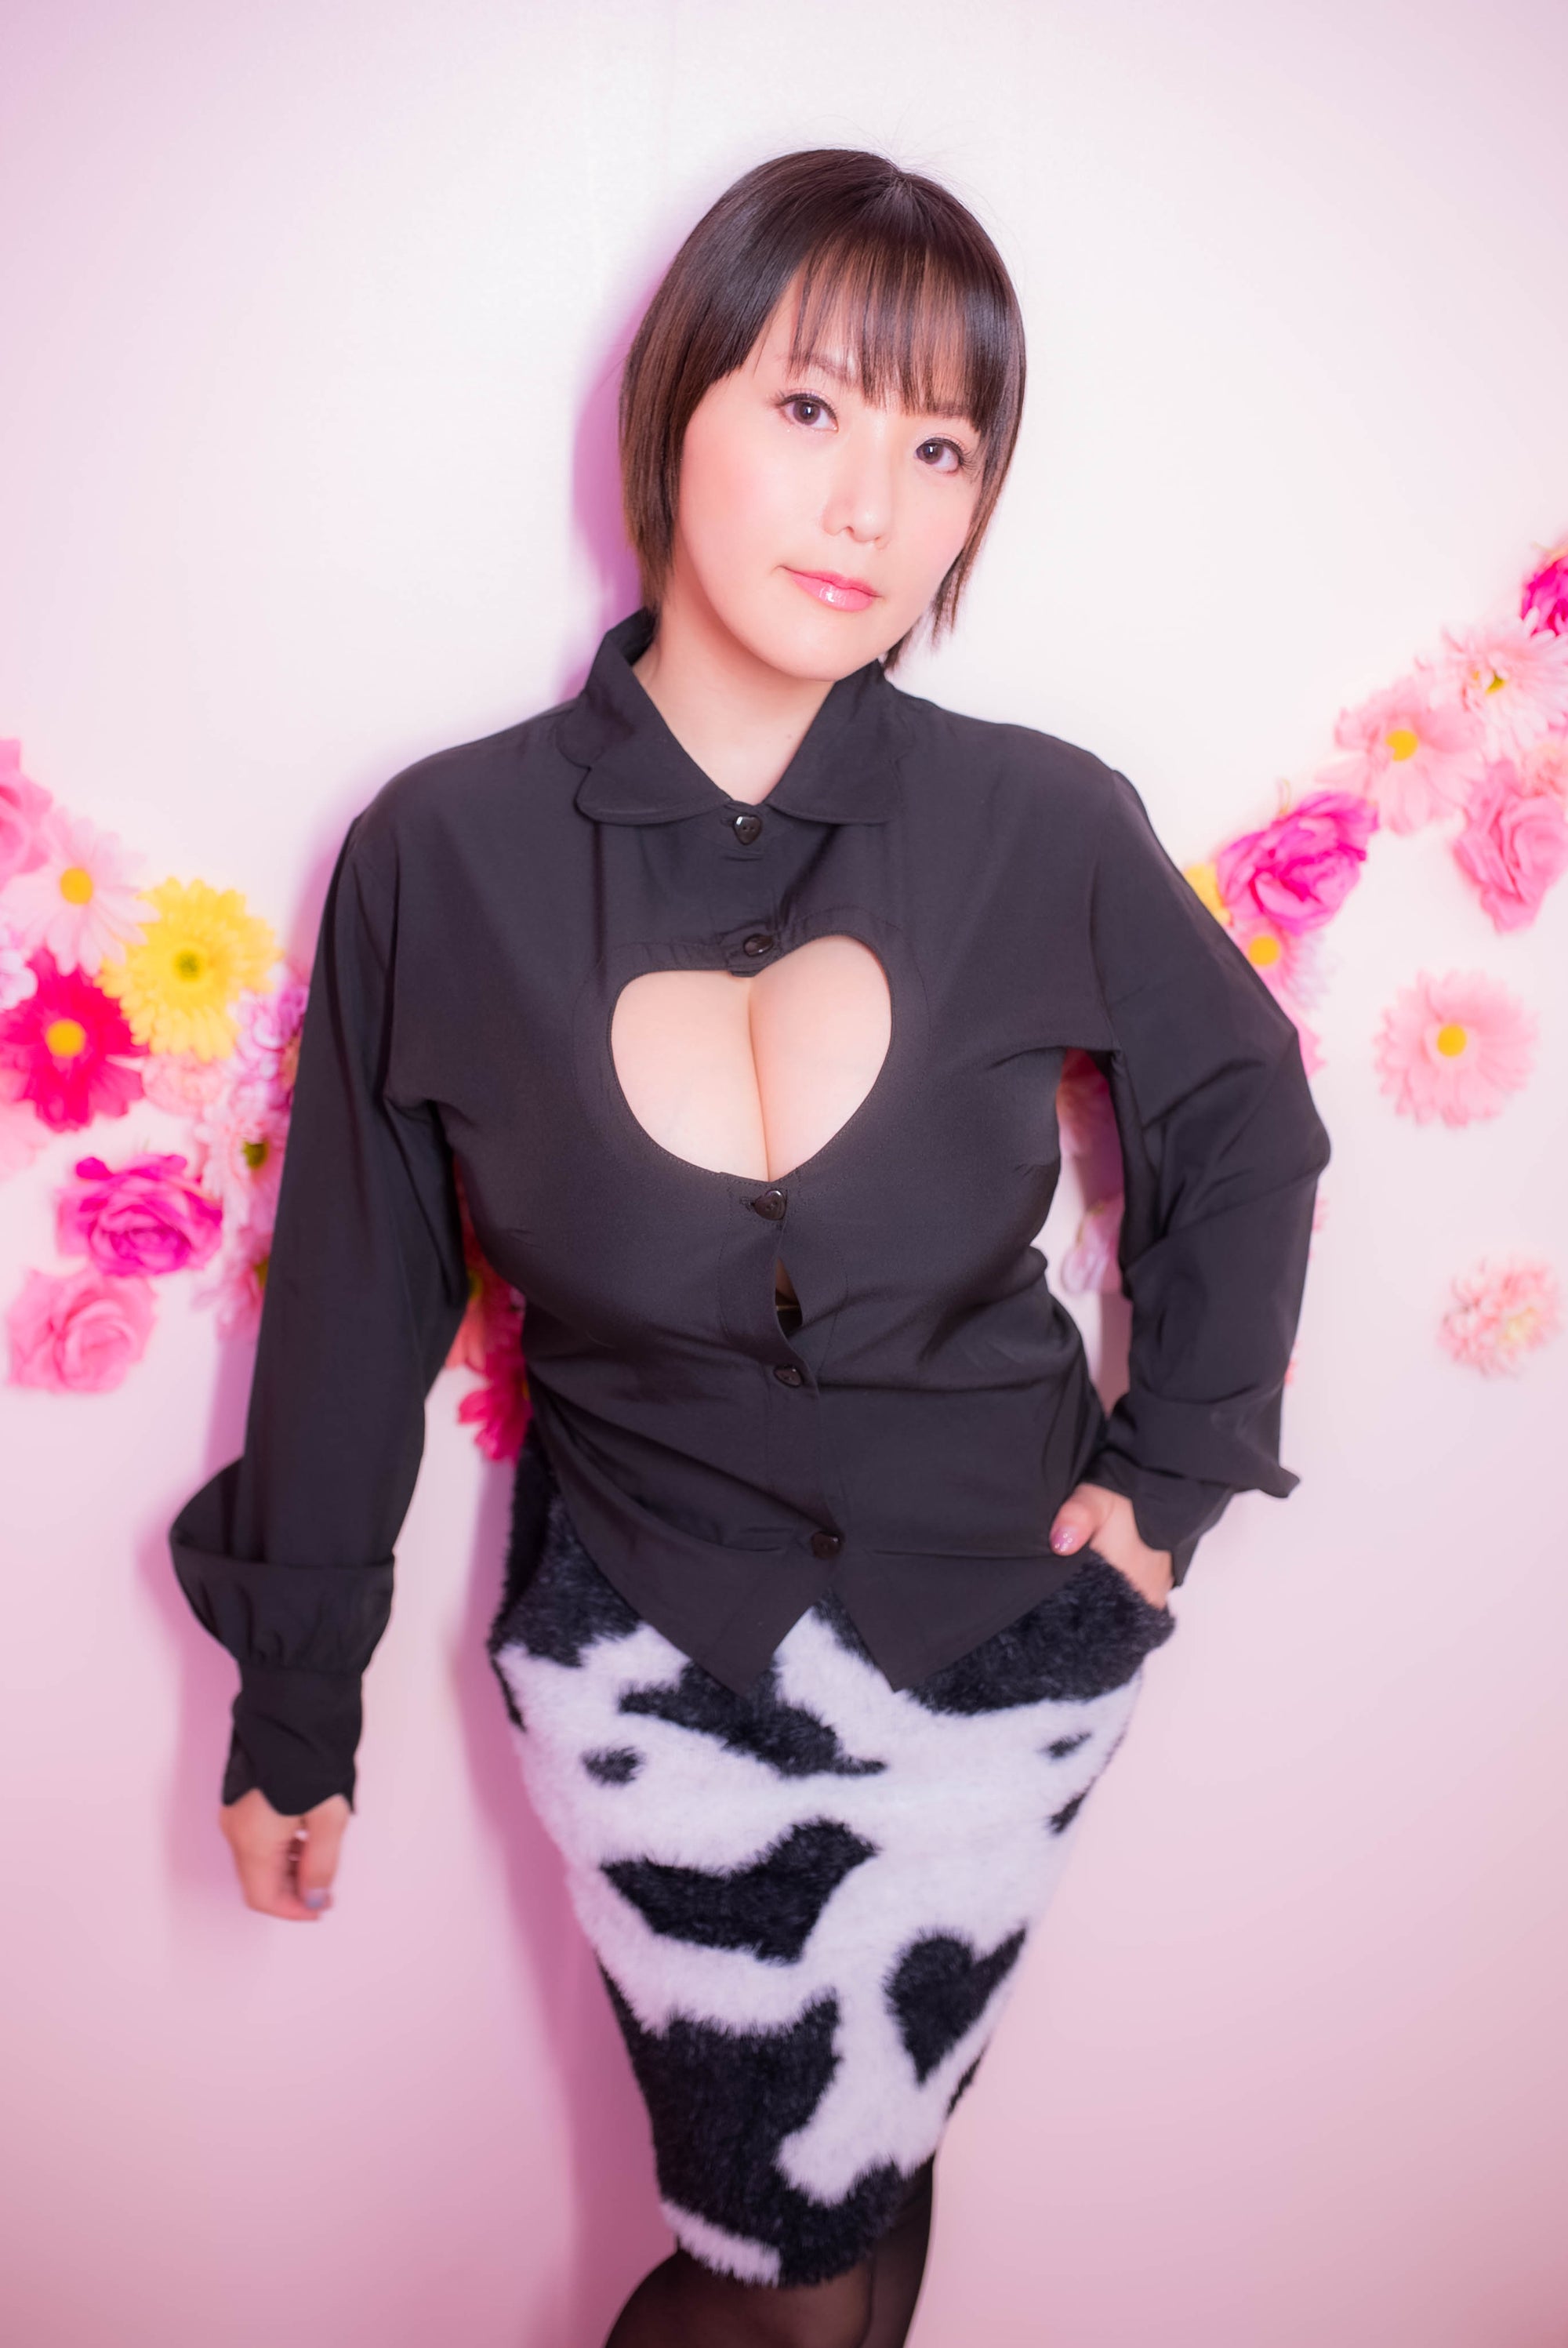 (Pre-Order) Shibuya's Cow Skirt (Black)